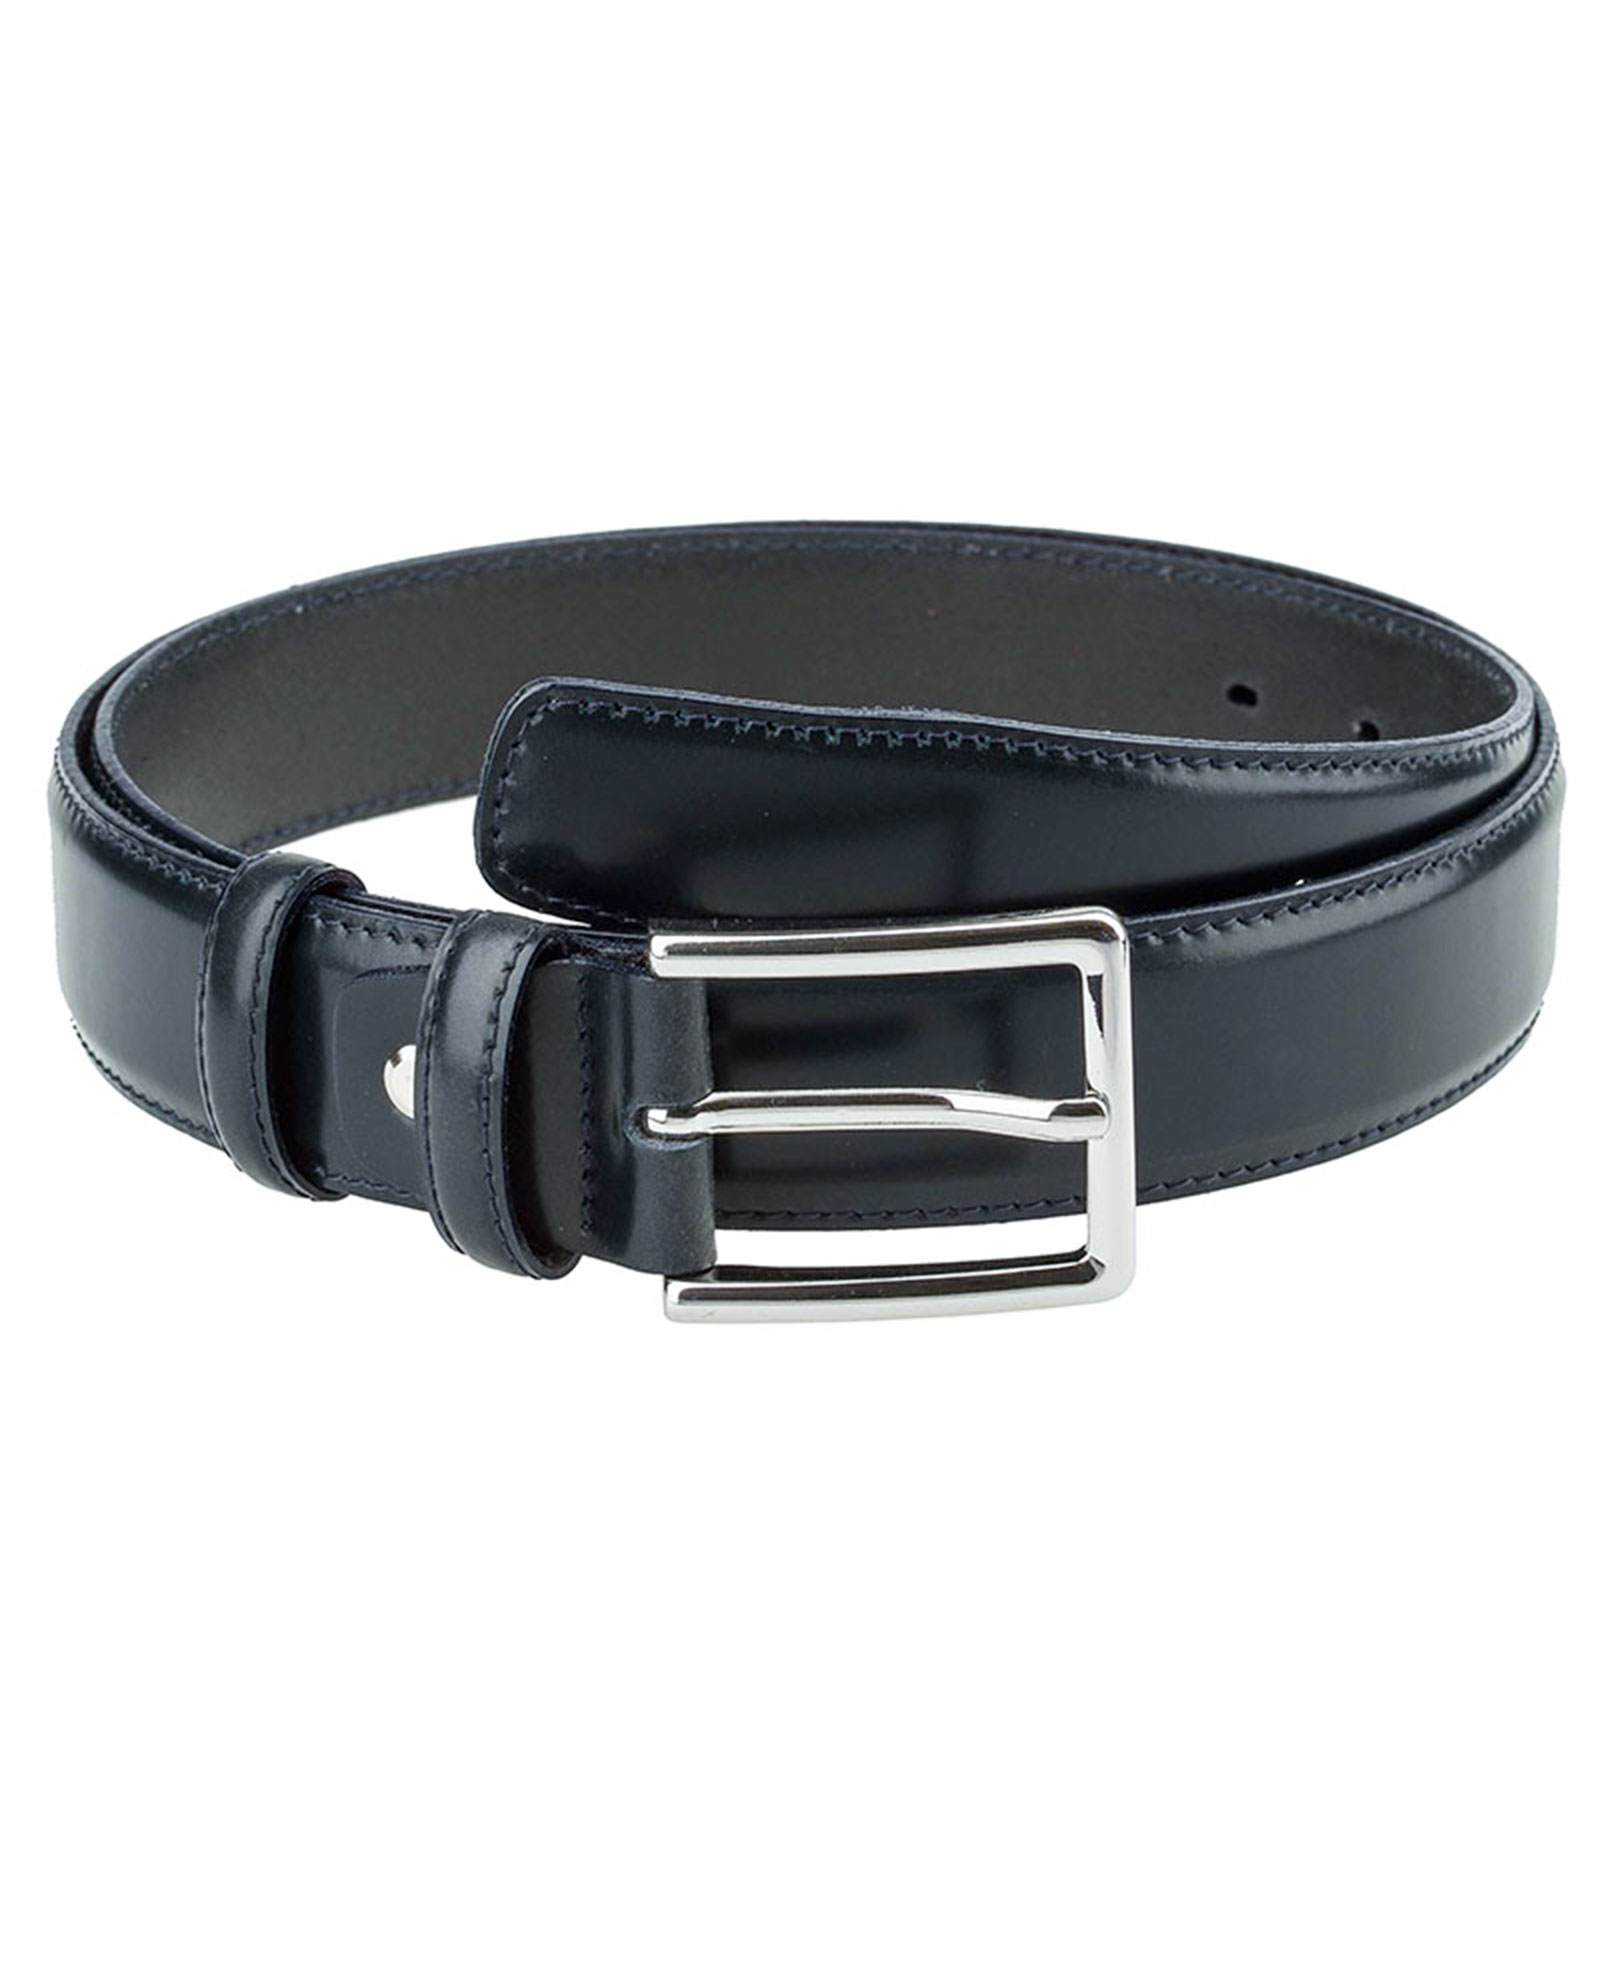 Buy Men's Navy Blue Leather Belt | LeatherBeltsOnline.com